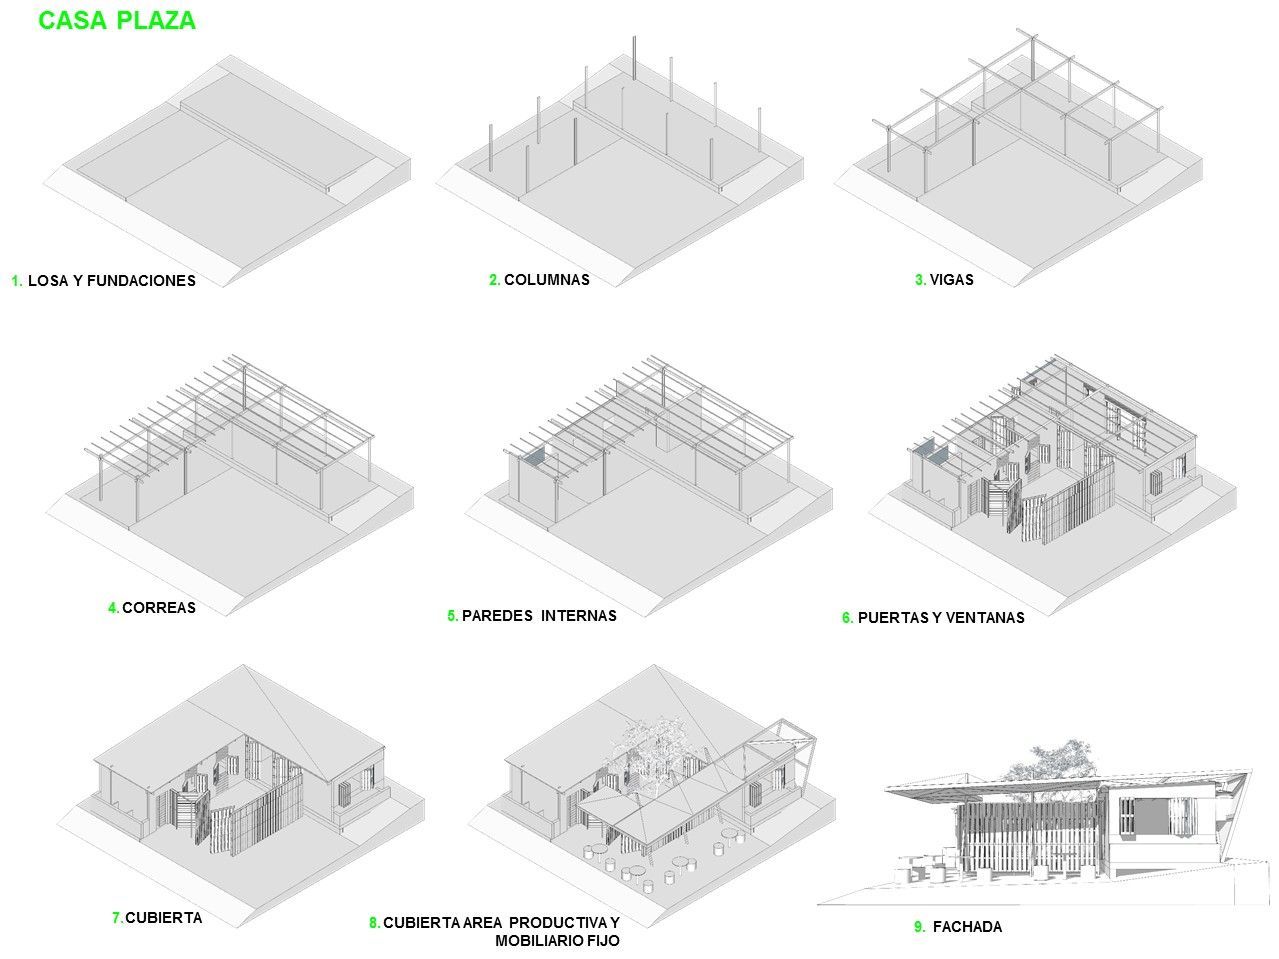 Casa Plaza (Vivienda Barrial Productiva), Taller de Desarrollo Urbano Taller de Desarrollo Urbano Minimalist house